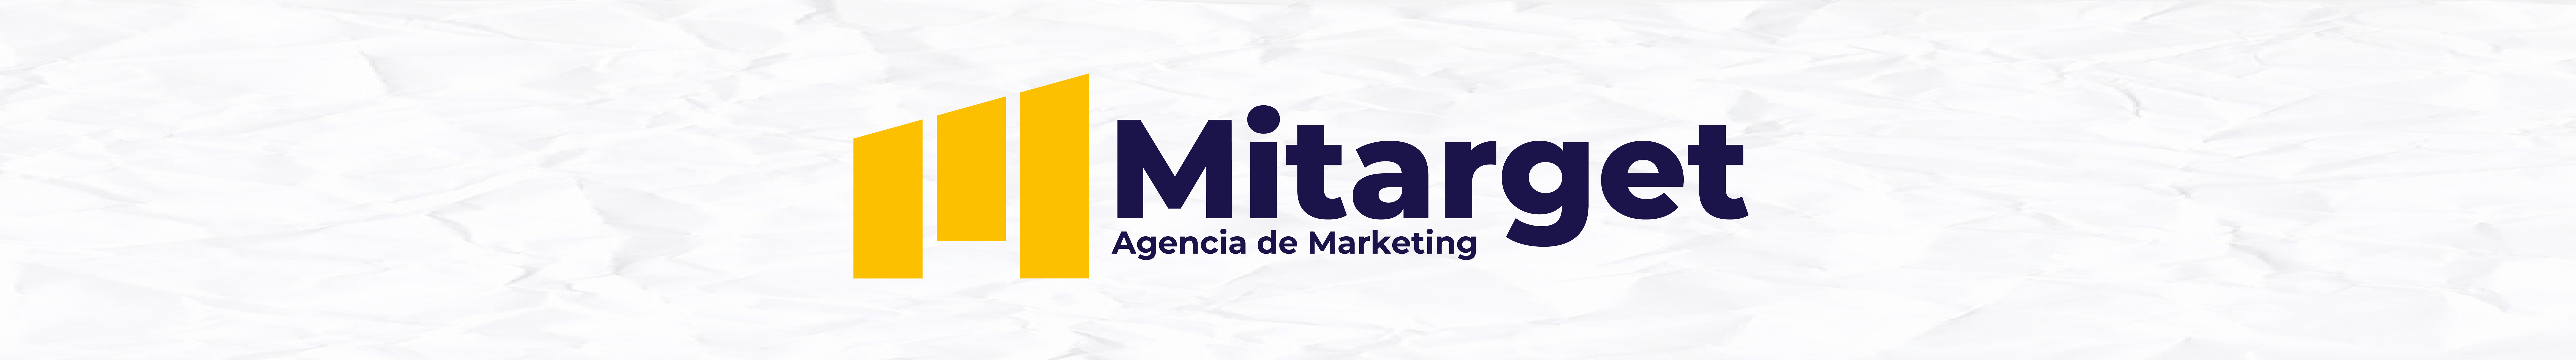 Mitarget Agencia de Marketing's profile banner